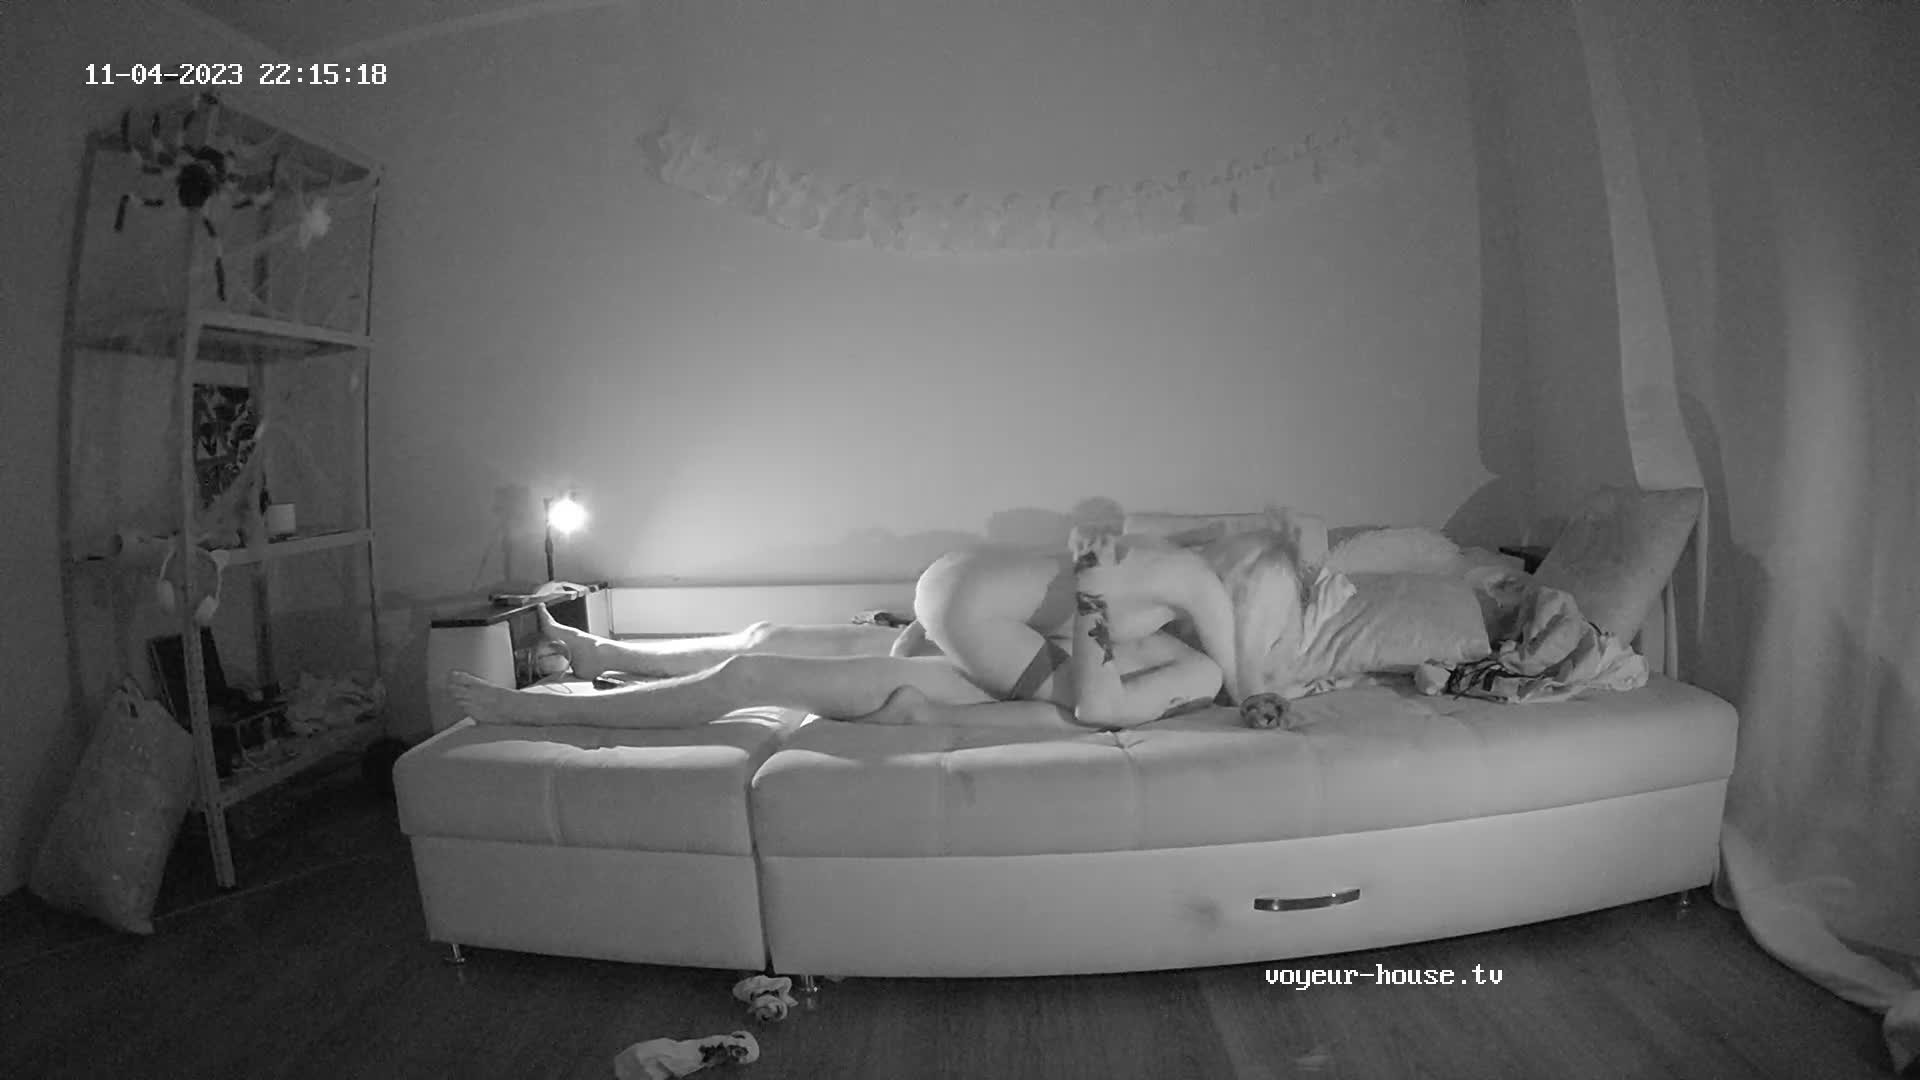 Tristan & Leafy couch sex, Nov-04-2023